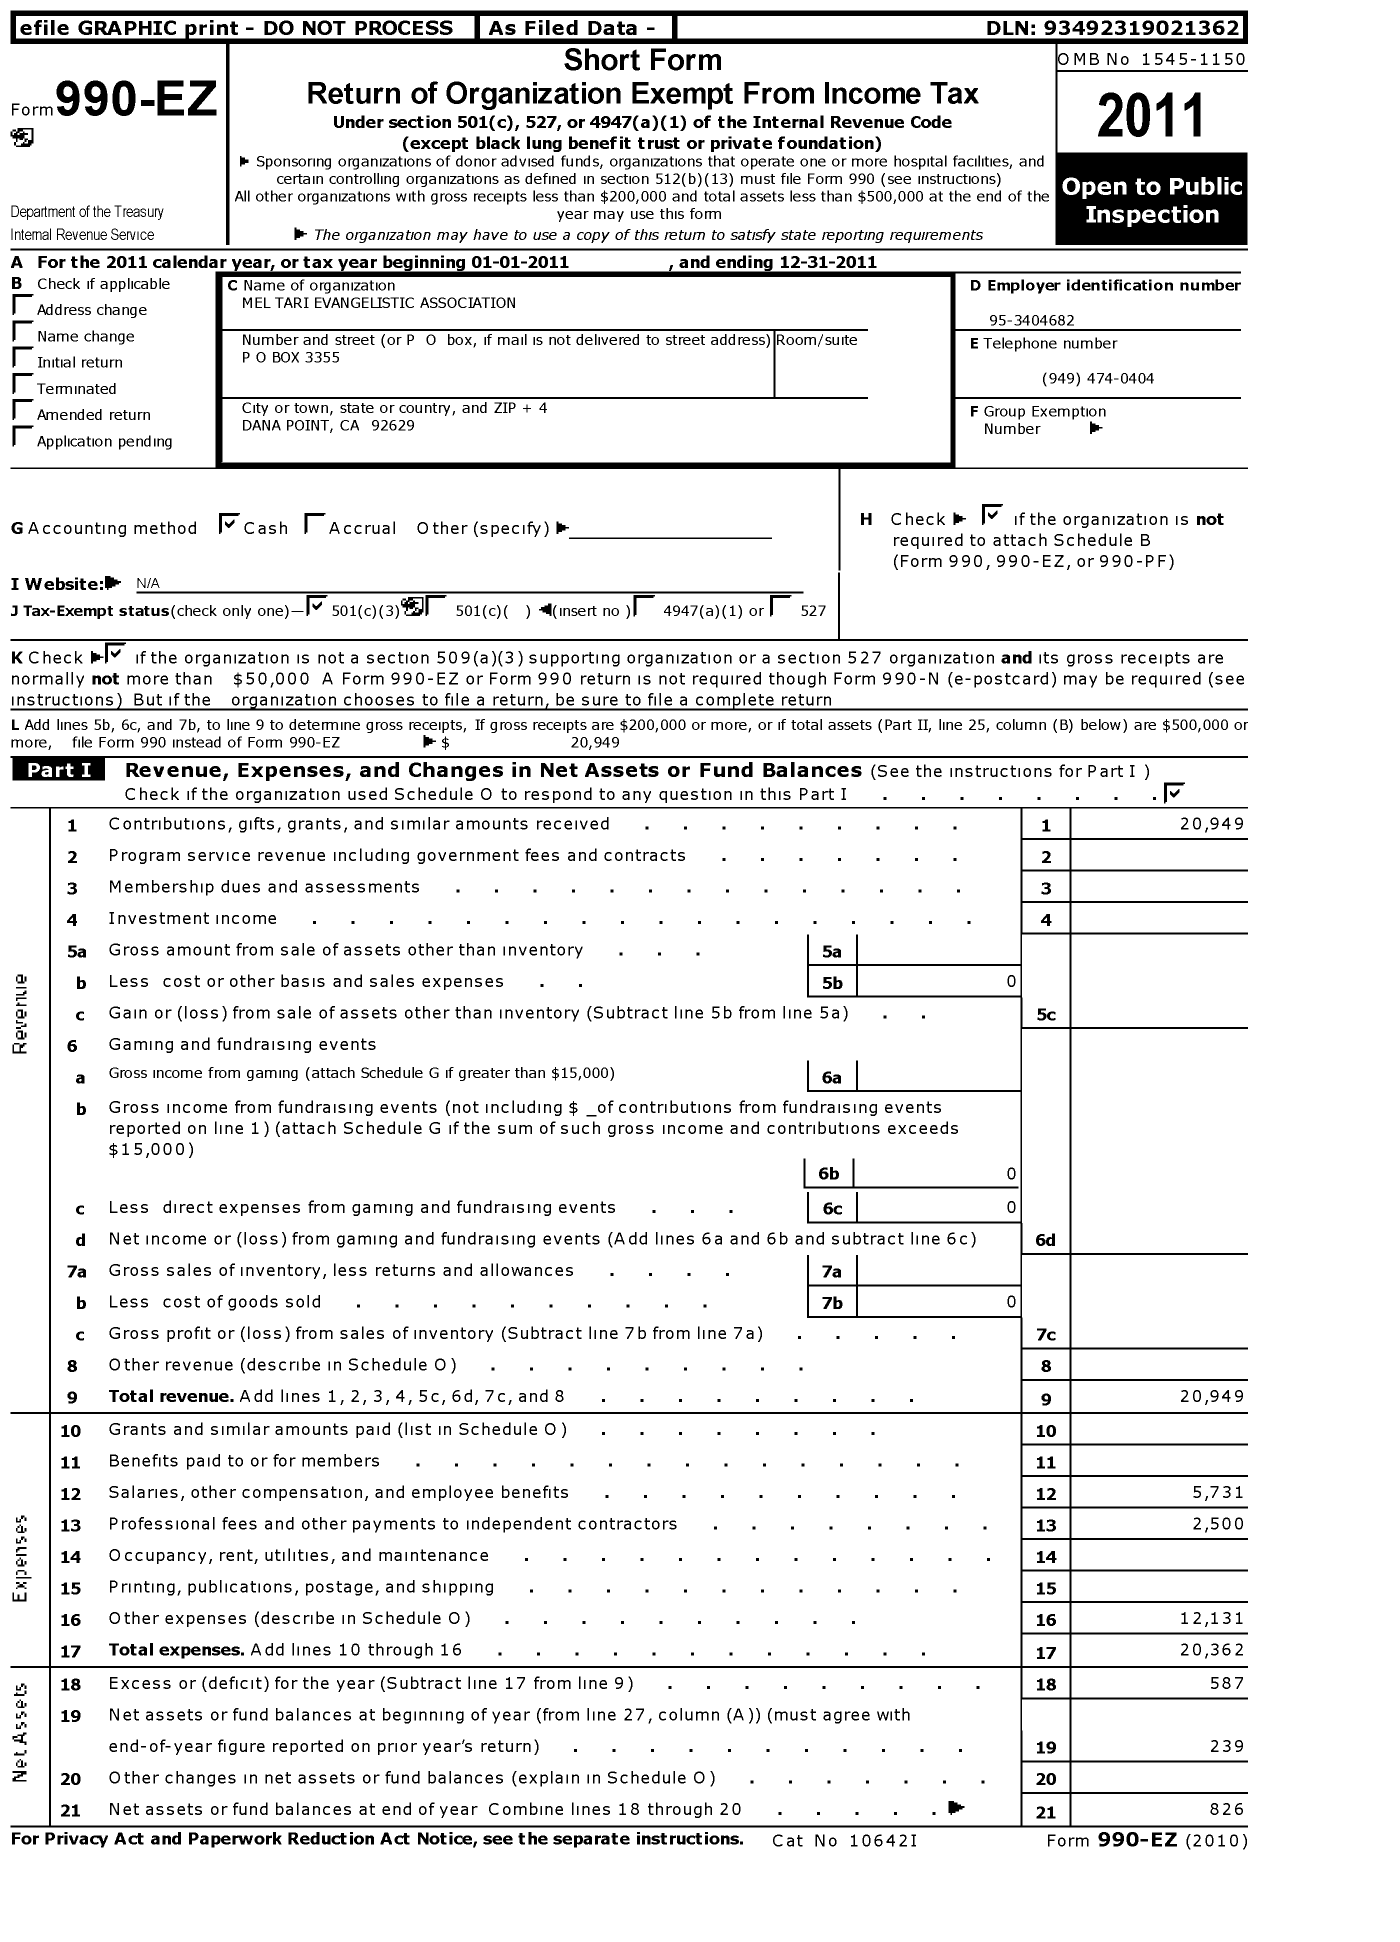 Image of first page of 2011 Form 990EZ for Mel Tari Evangelistic Association